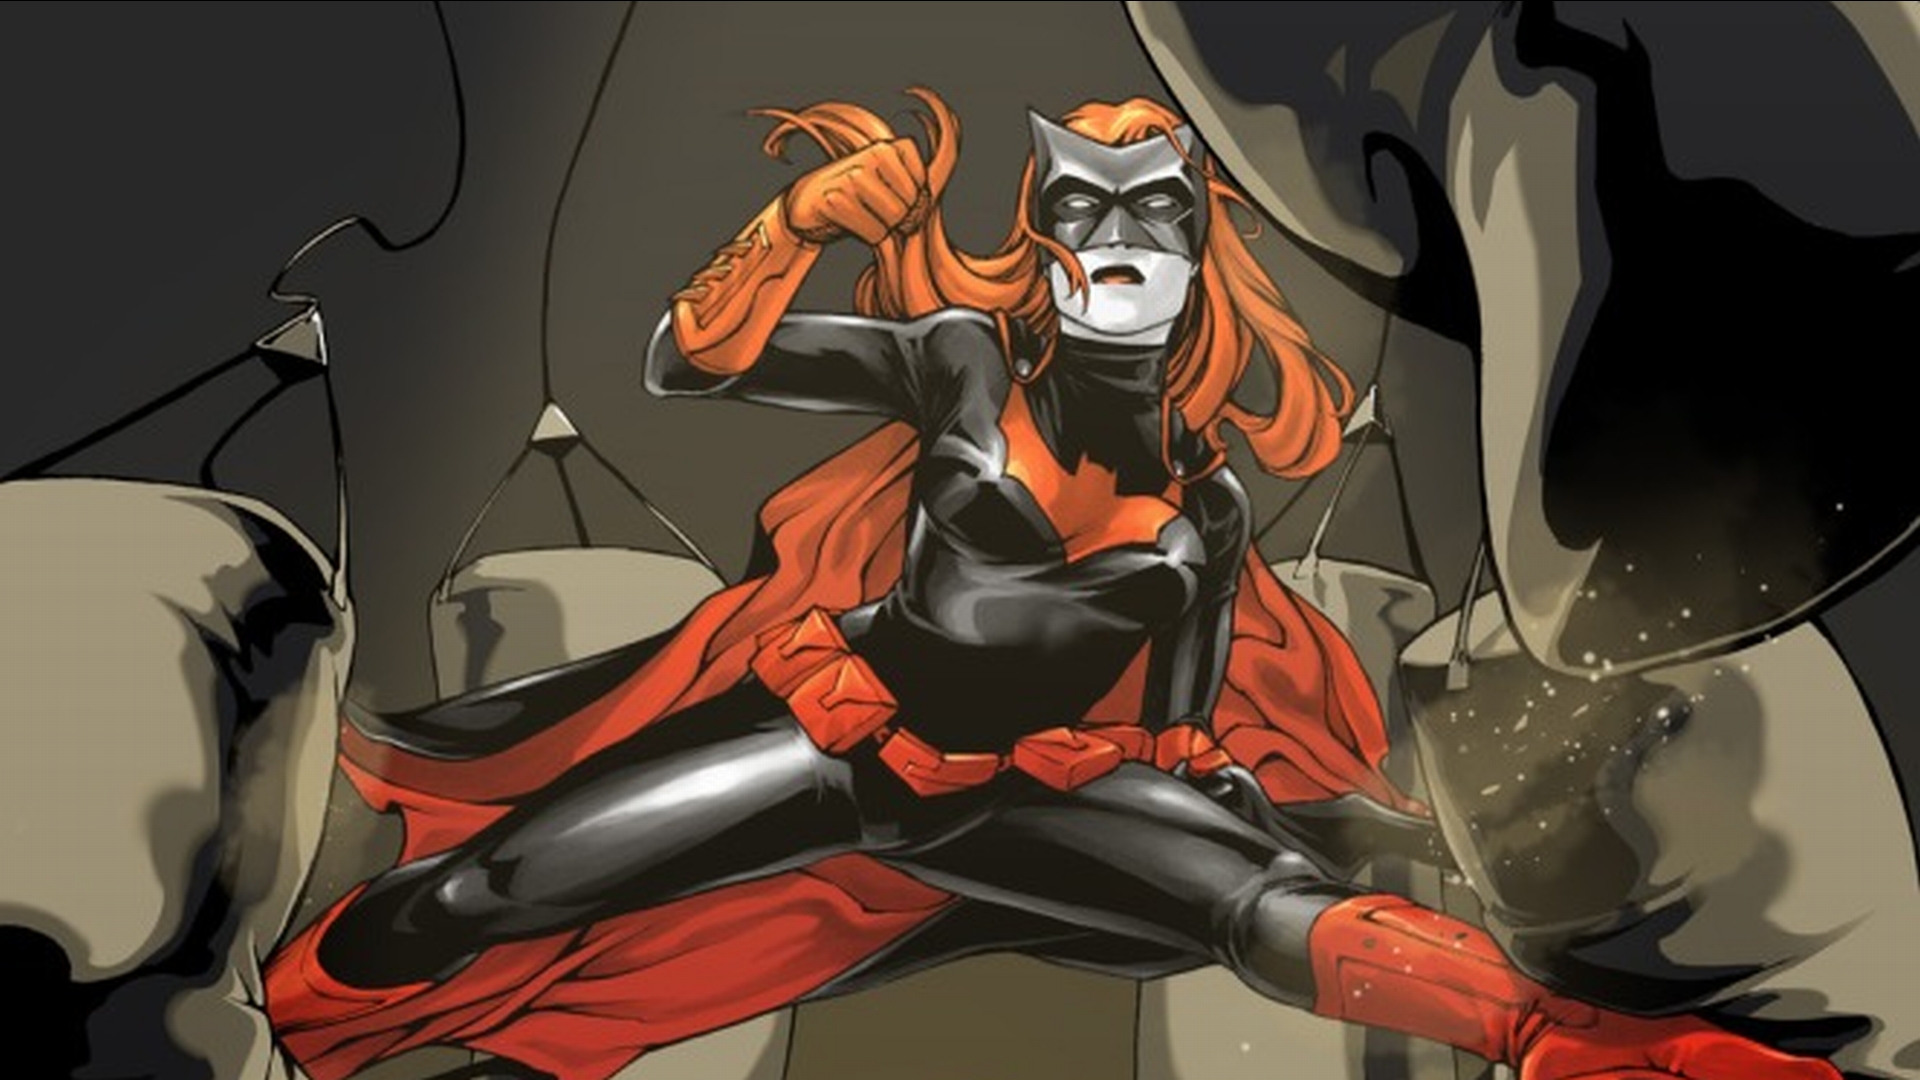 Batwoman comic-themed desktop wallpaper. Vibrant colors, dynamic illustration.